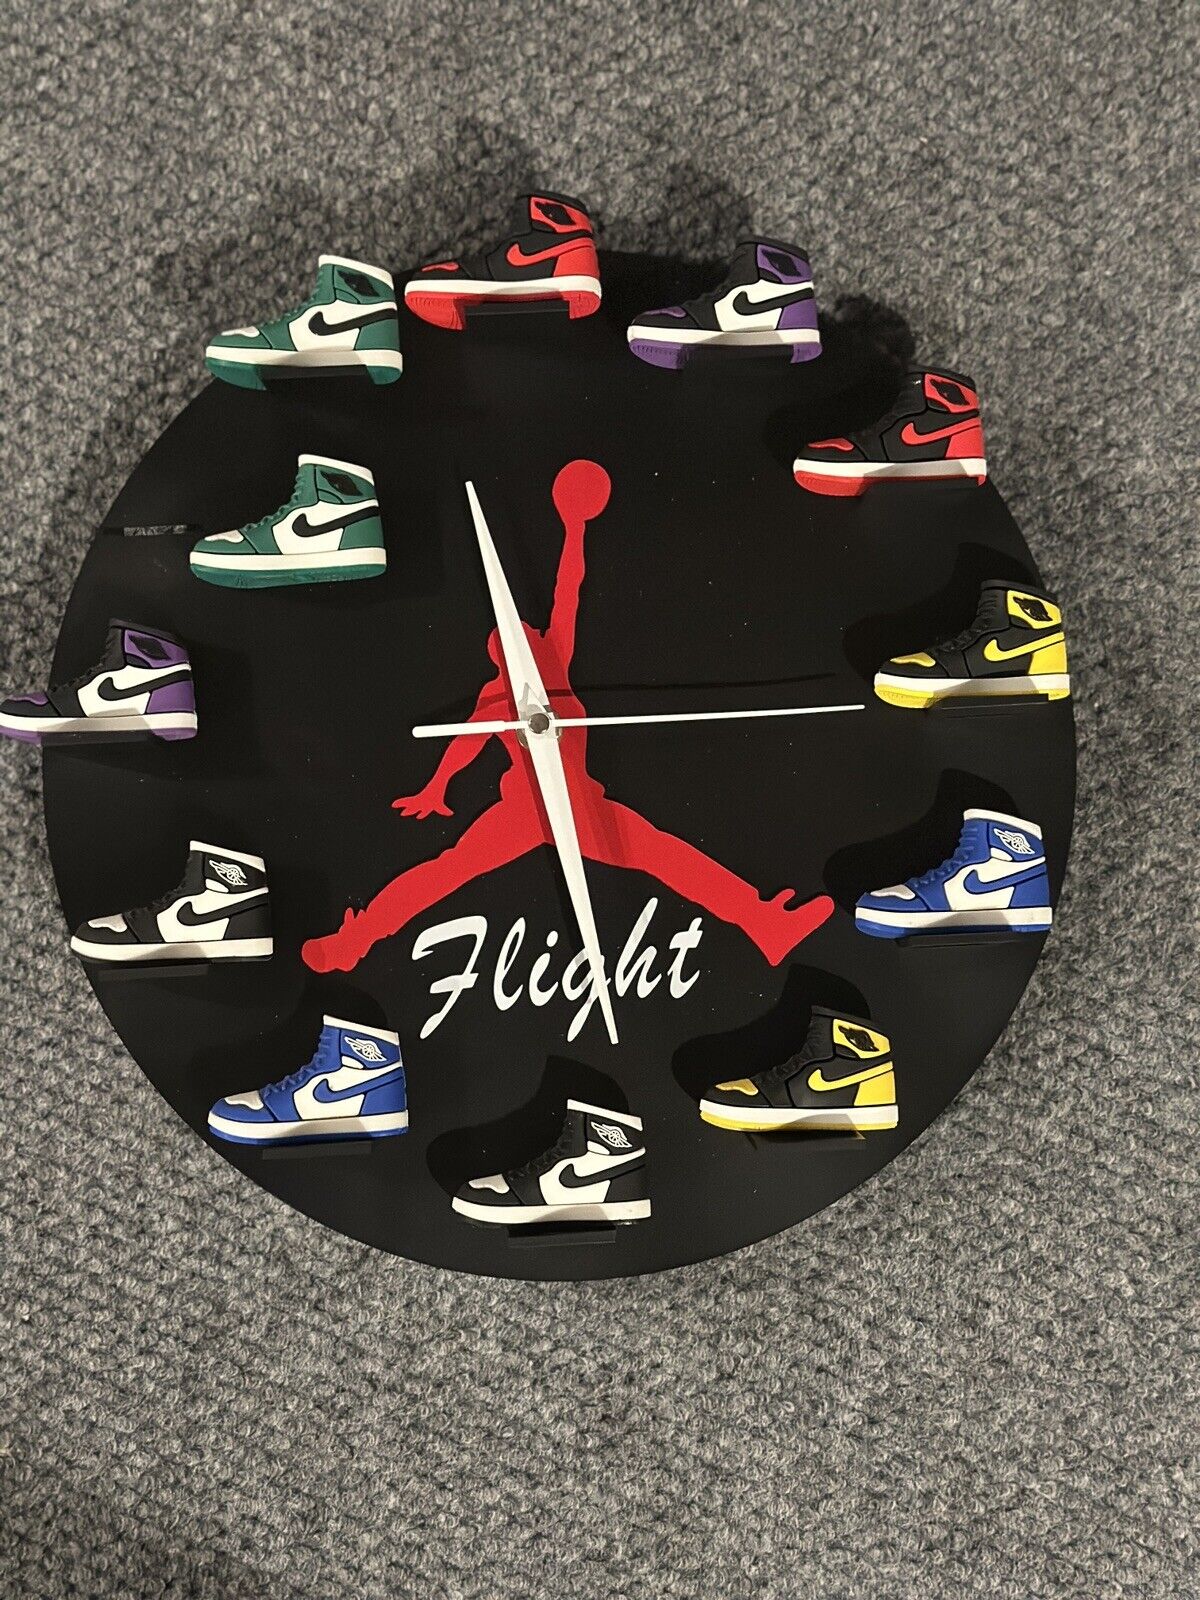 Jordan Flight Wall Clock 99% Complete 